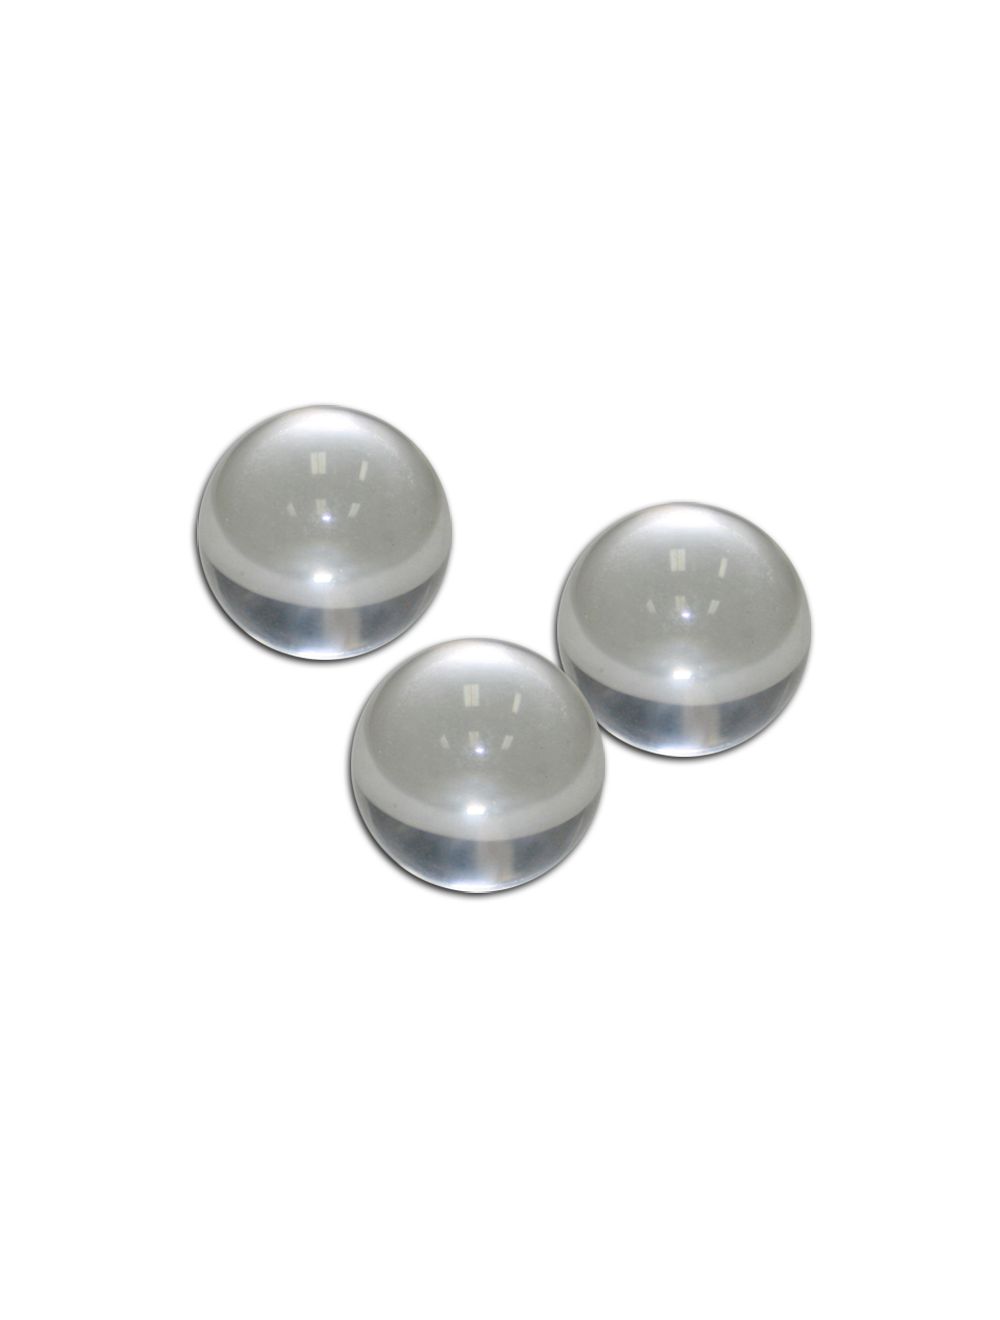 Chemplex SpectroVial 1239 Tungsten Carbide Ball Pestle 12.7mm Diameter Pack of 6 